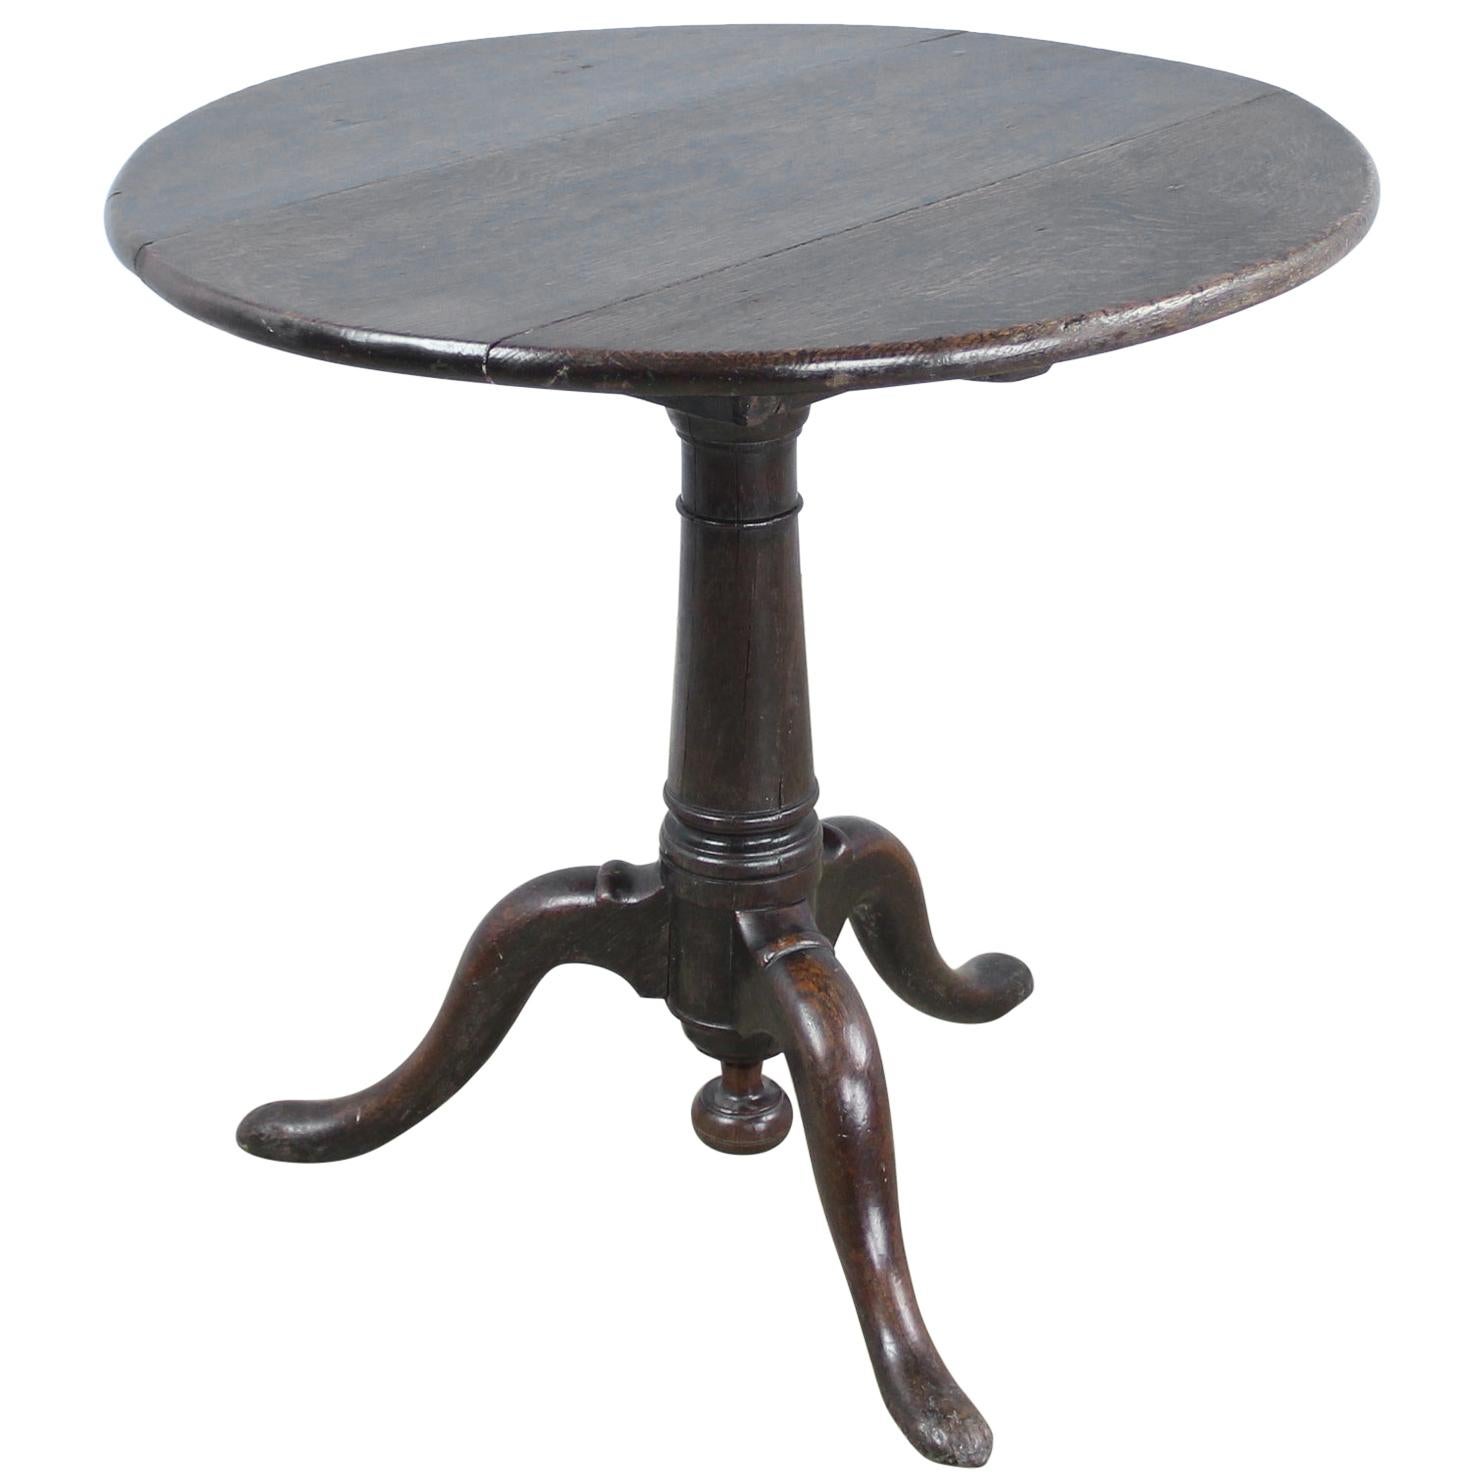 Early Georgian Period Oak Tripod Based Lamp Table